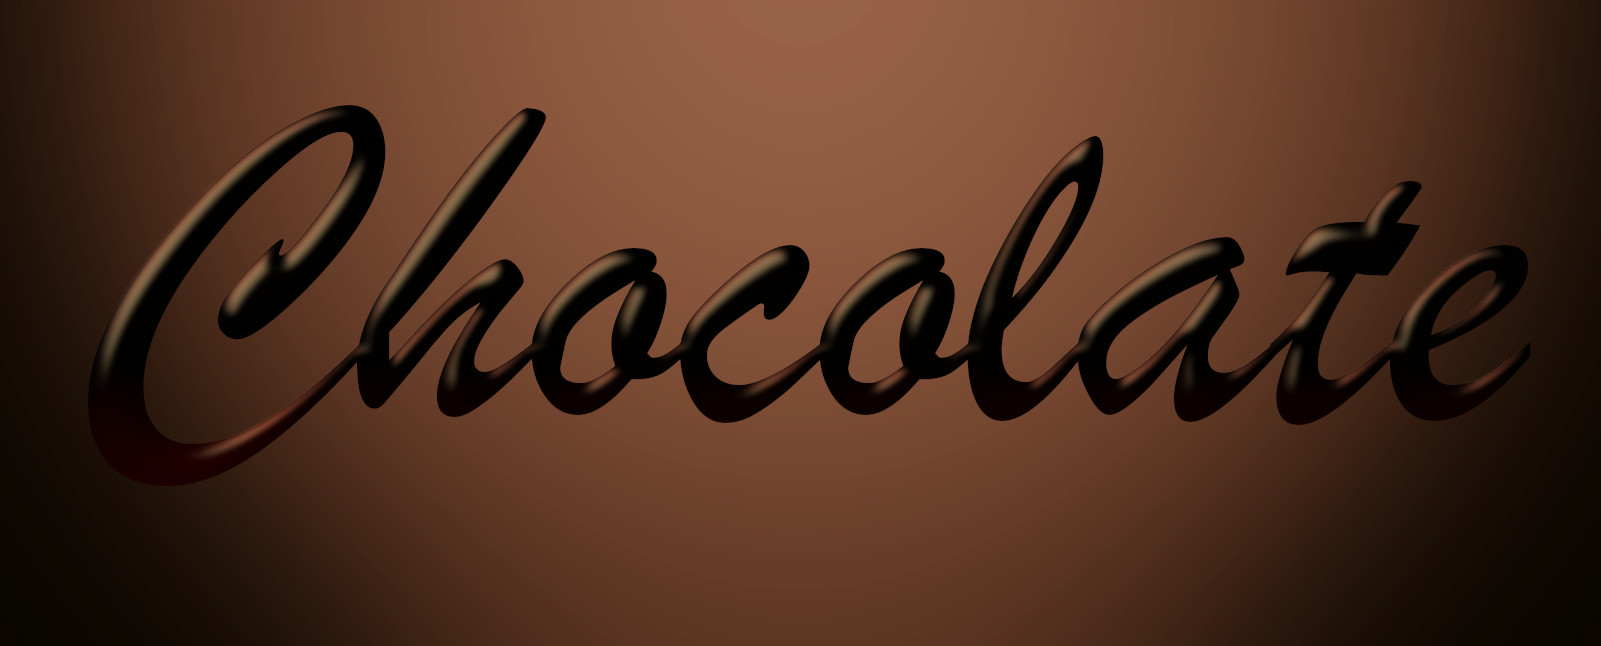 Chocolate_Pocholo Script.JPG